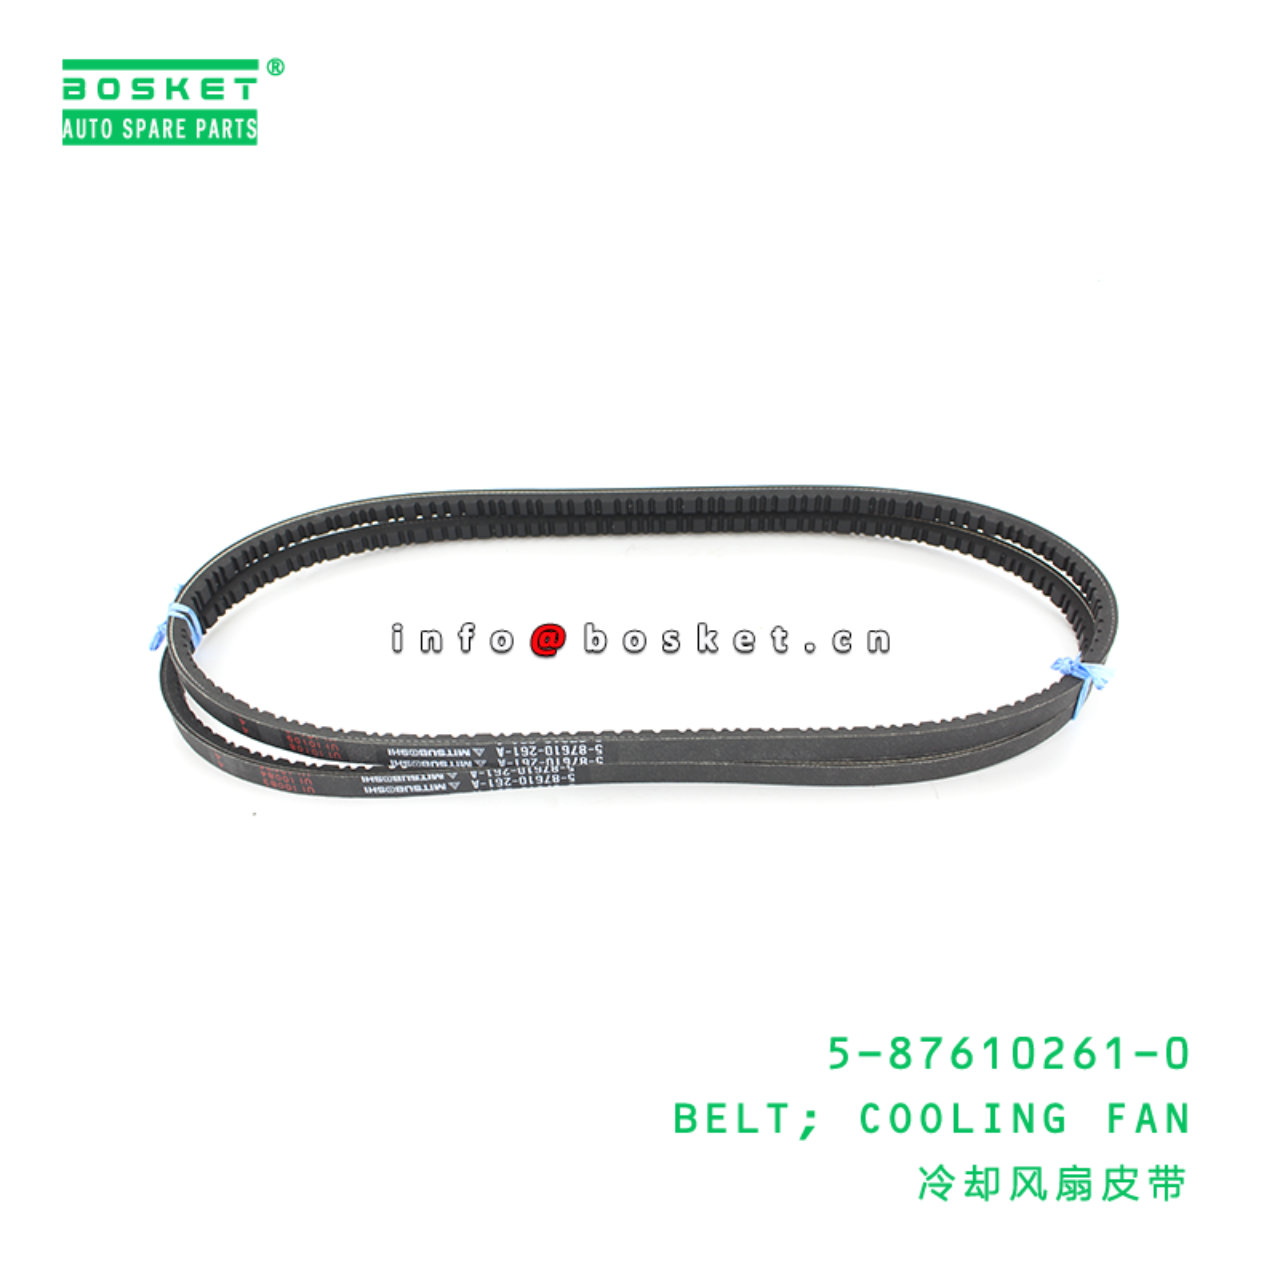 5-87610261-0 Cooling Fan Belt Suitable for ISUZU 5876102610